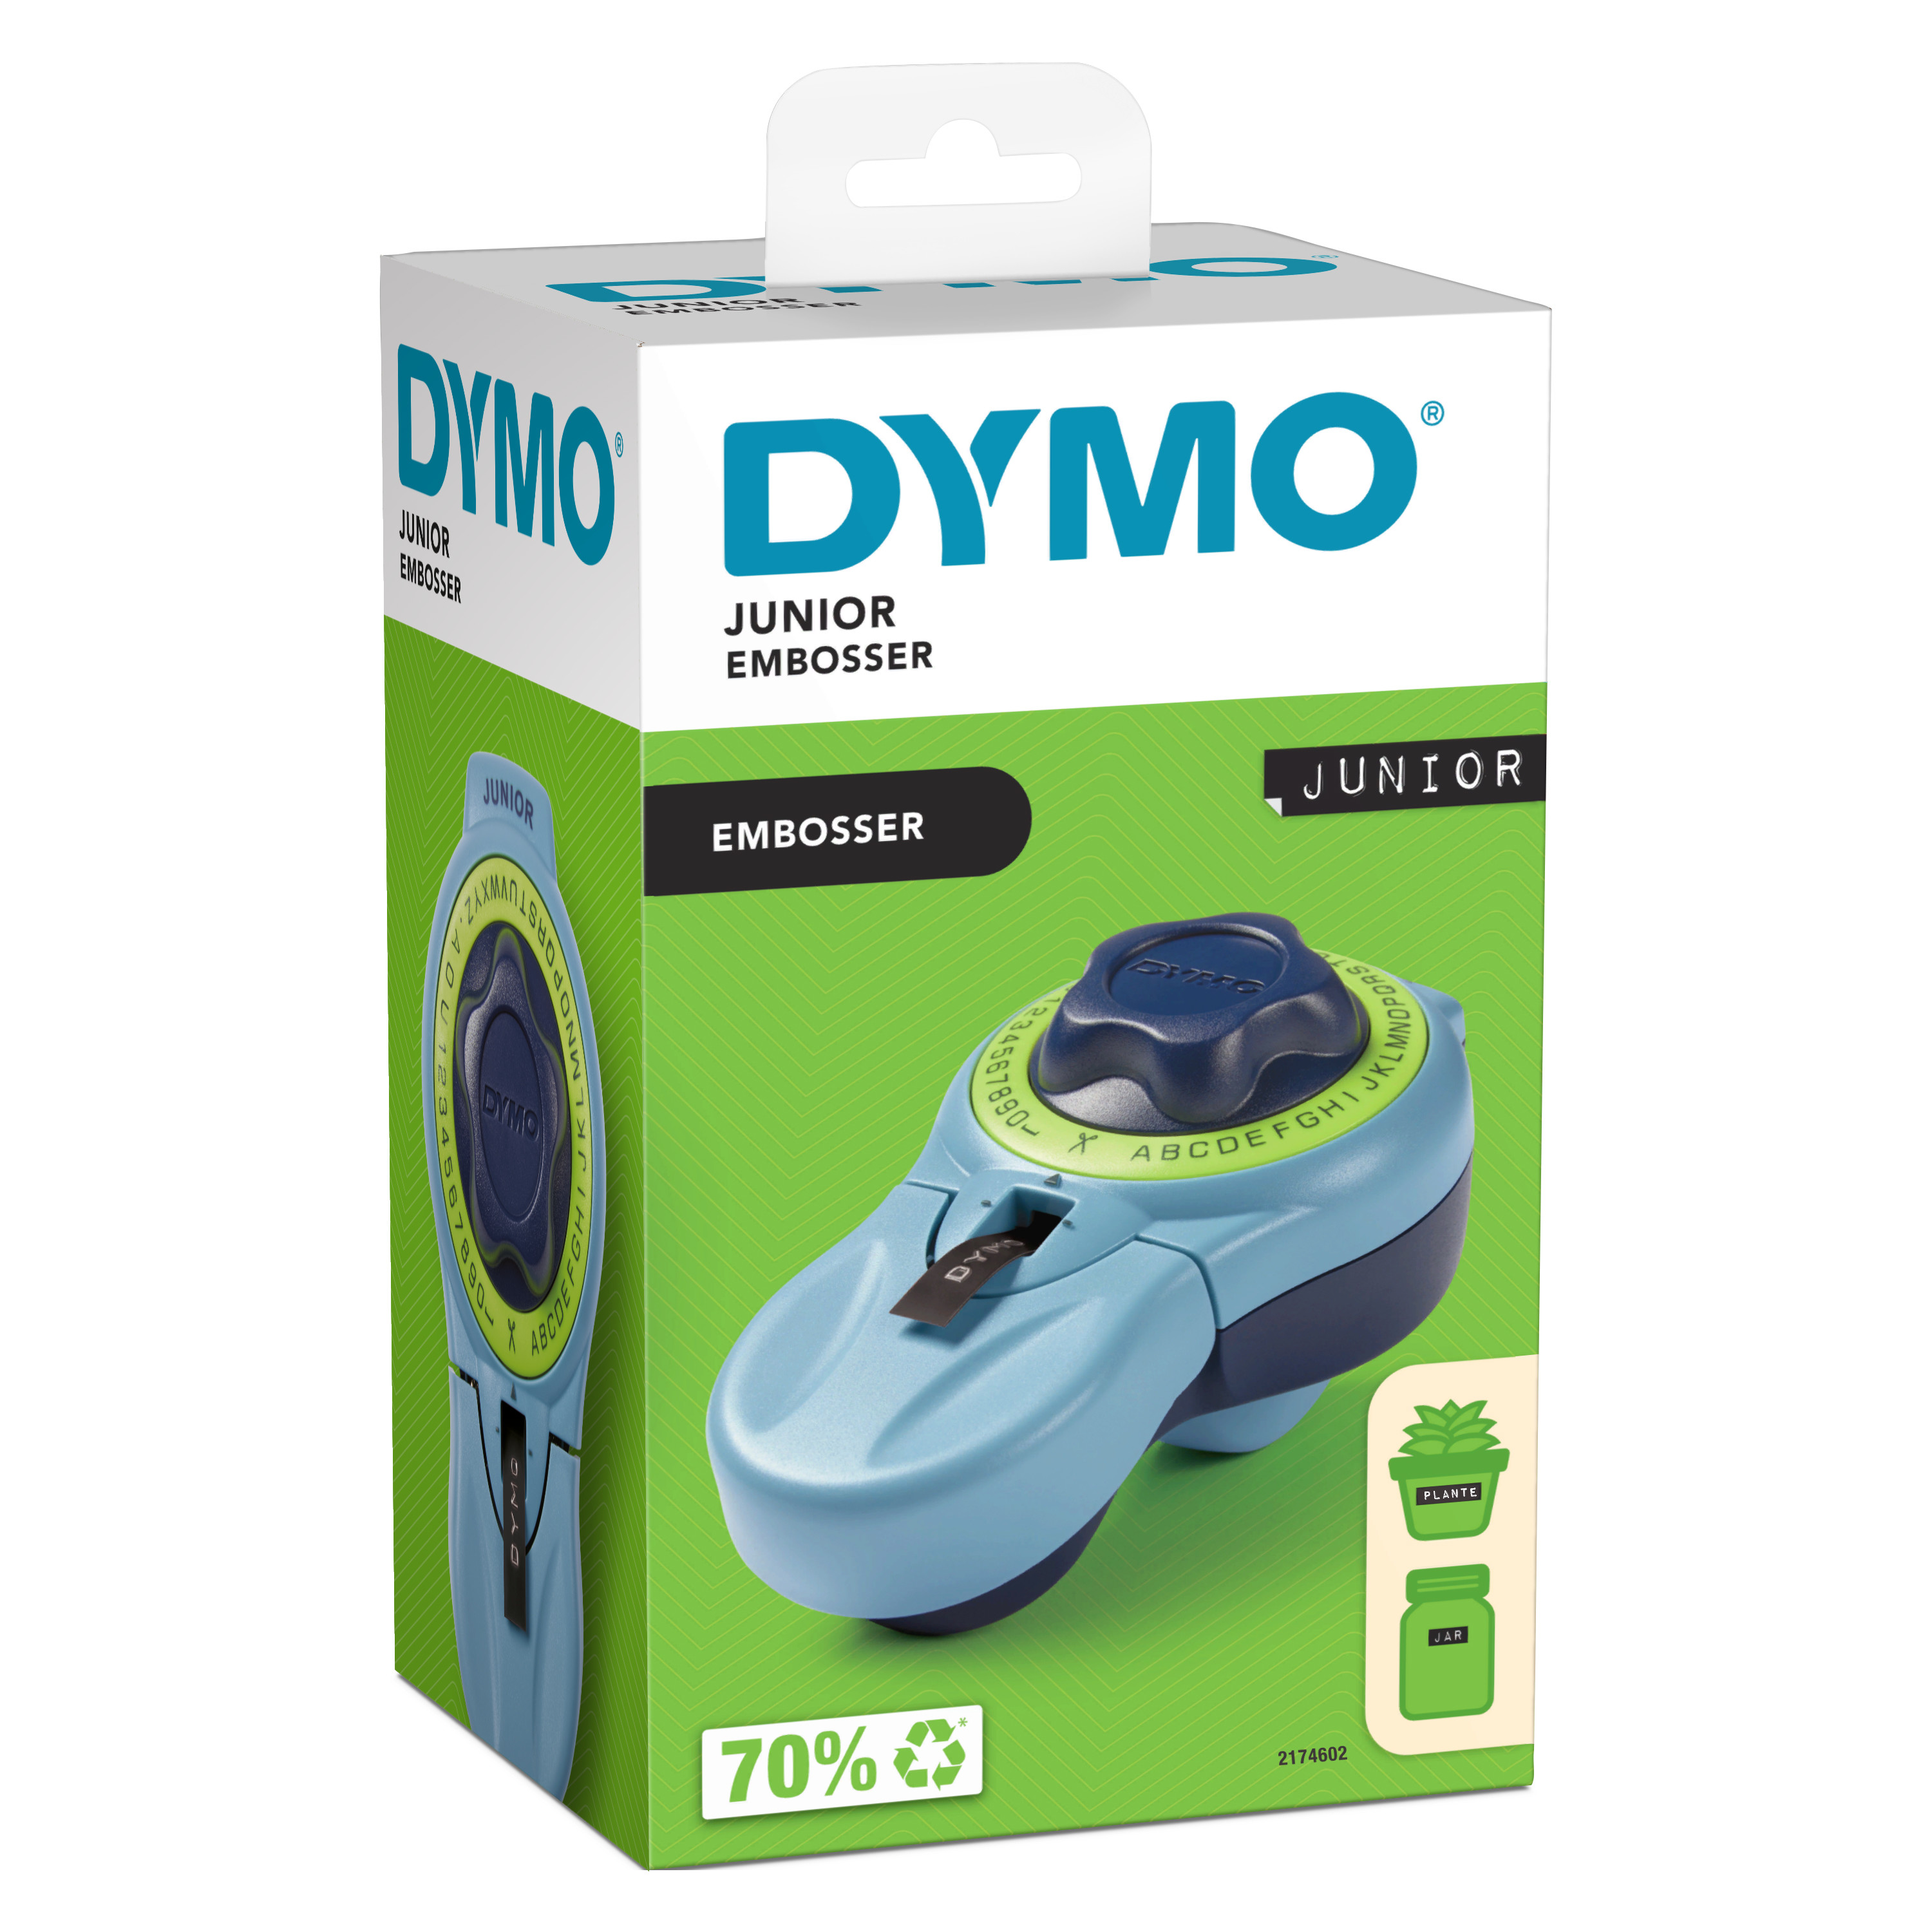 Dymo 2174602, Etikettendrucker, DYMO Junior Prägegerät 2174602 (BILD1)